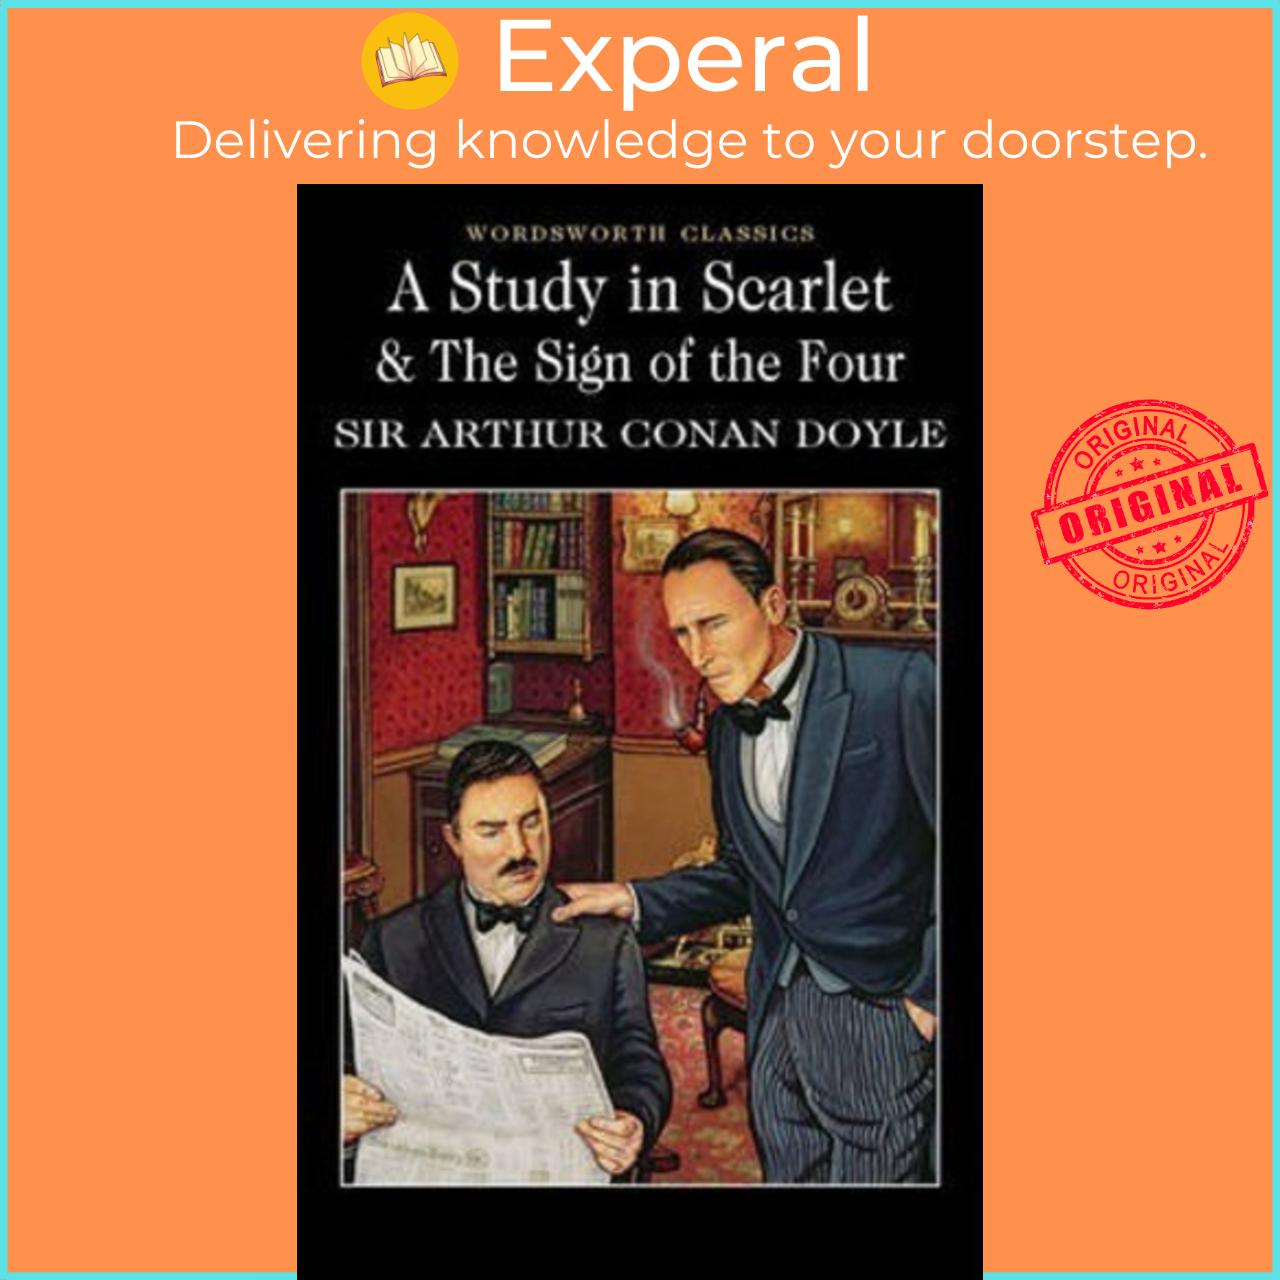 Sách - A Study in Scarlet (Wordsworth Classics) by Sir Arthur Conan Doyle (UK edition, paperback)